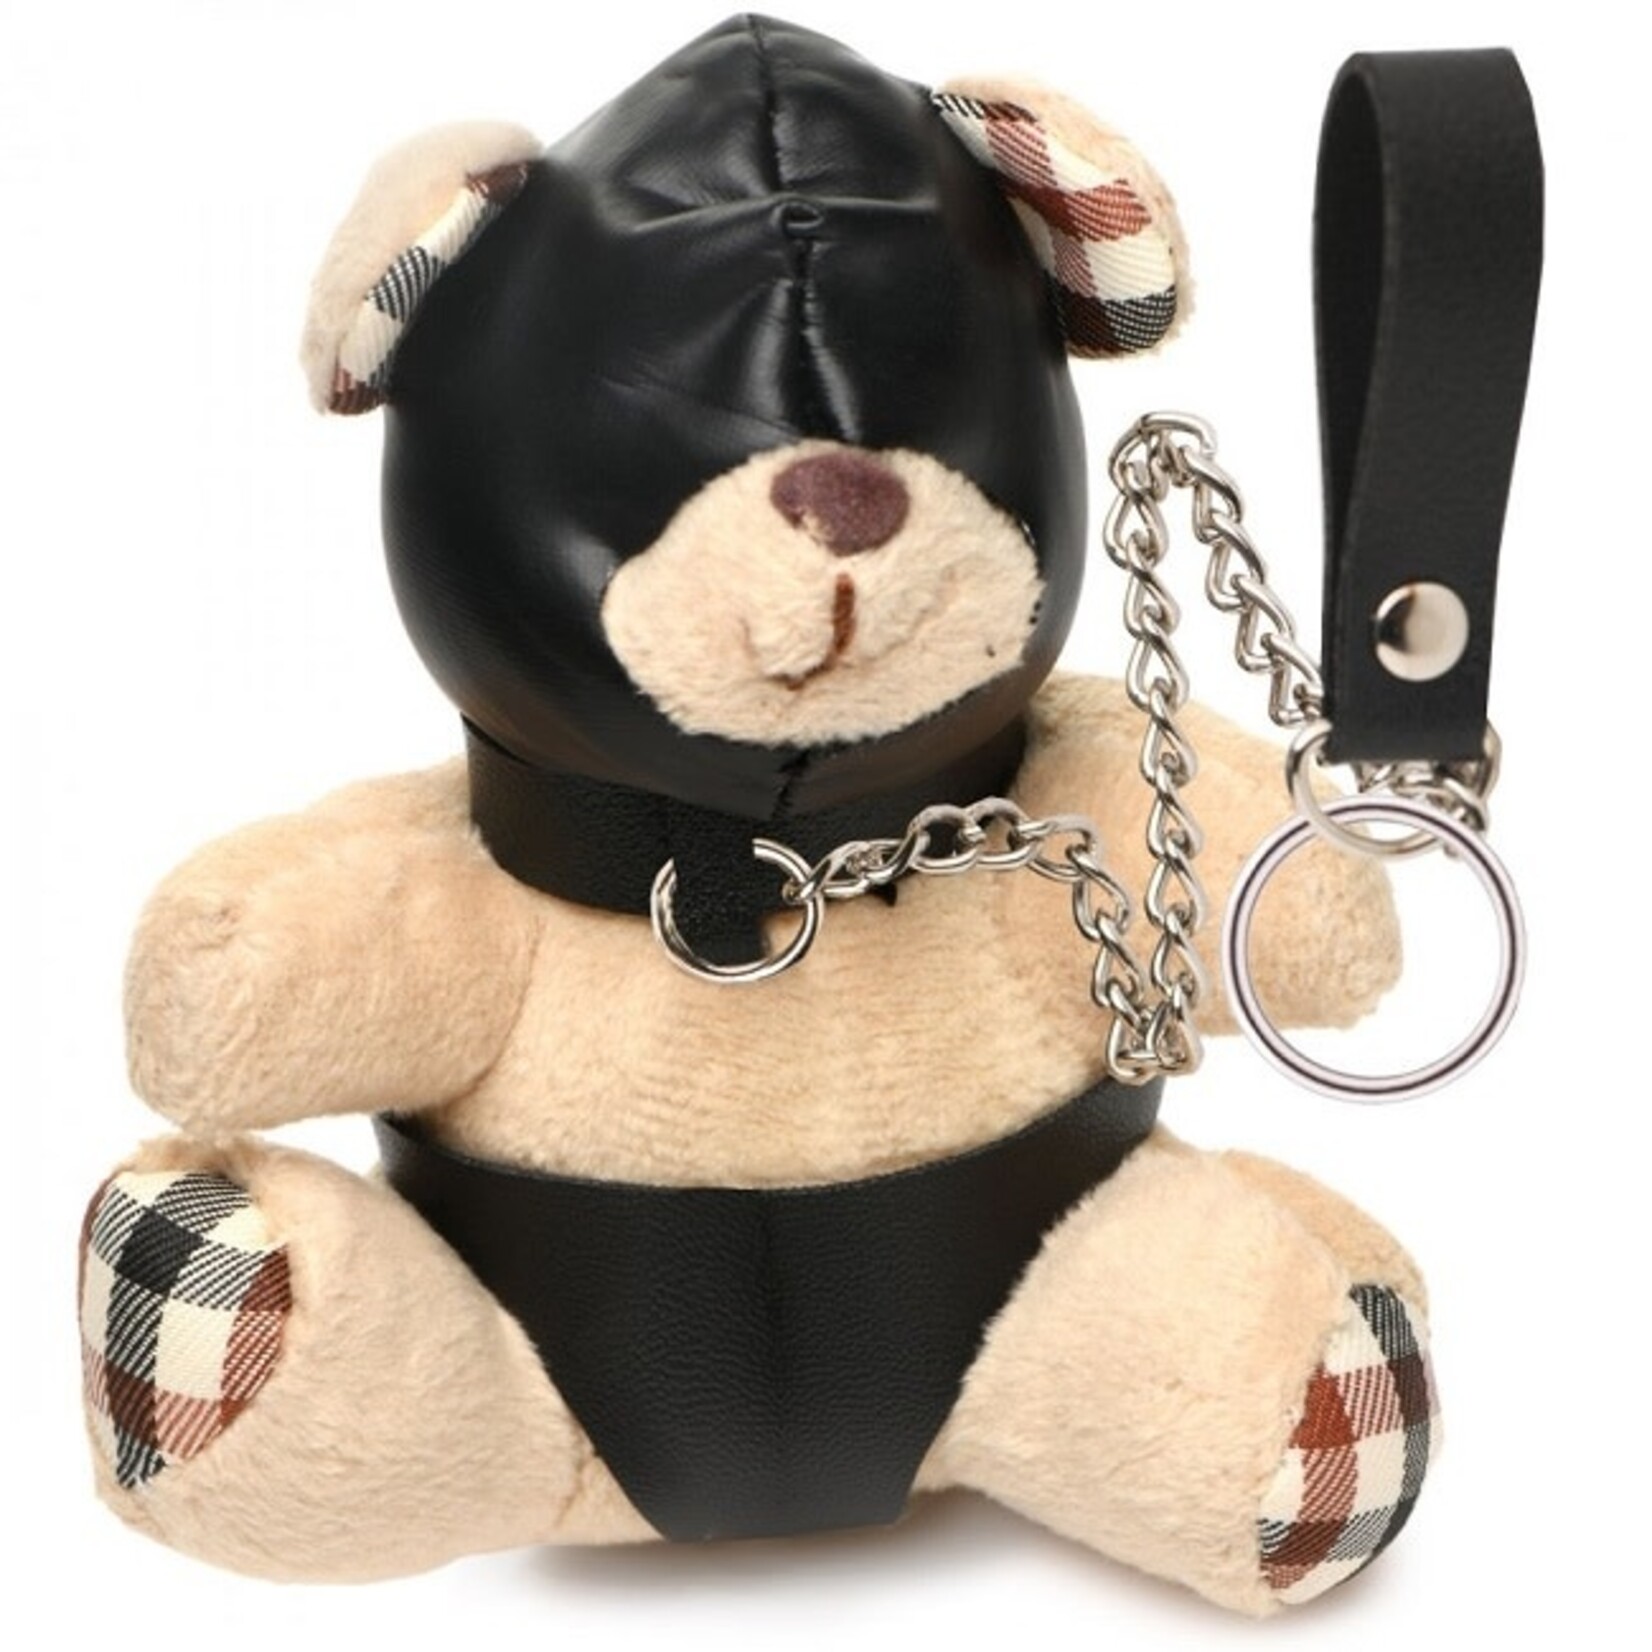 Master Series Master Series Hooded Teddy Bear Keychain